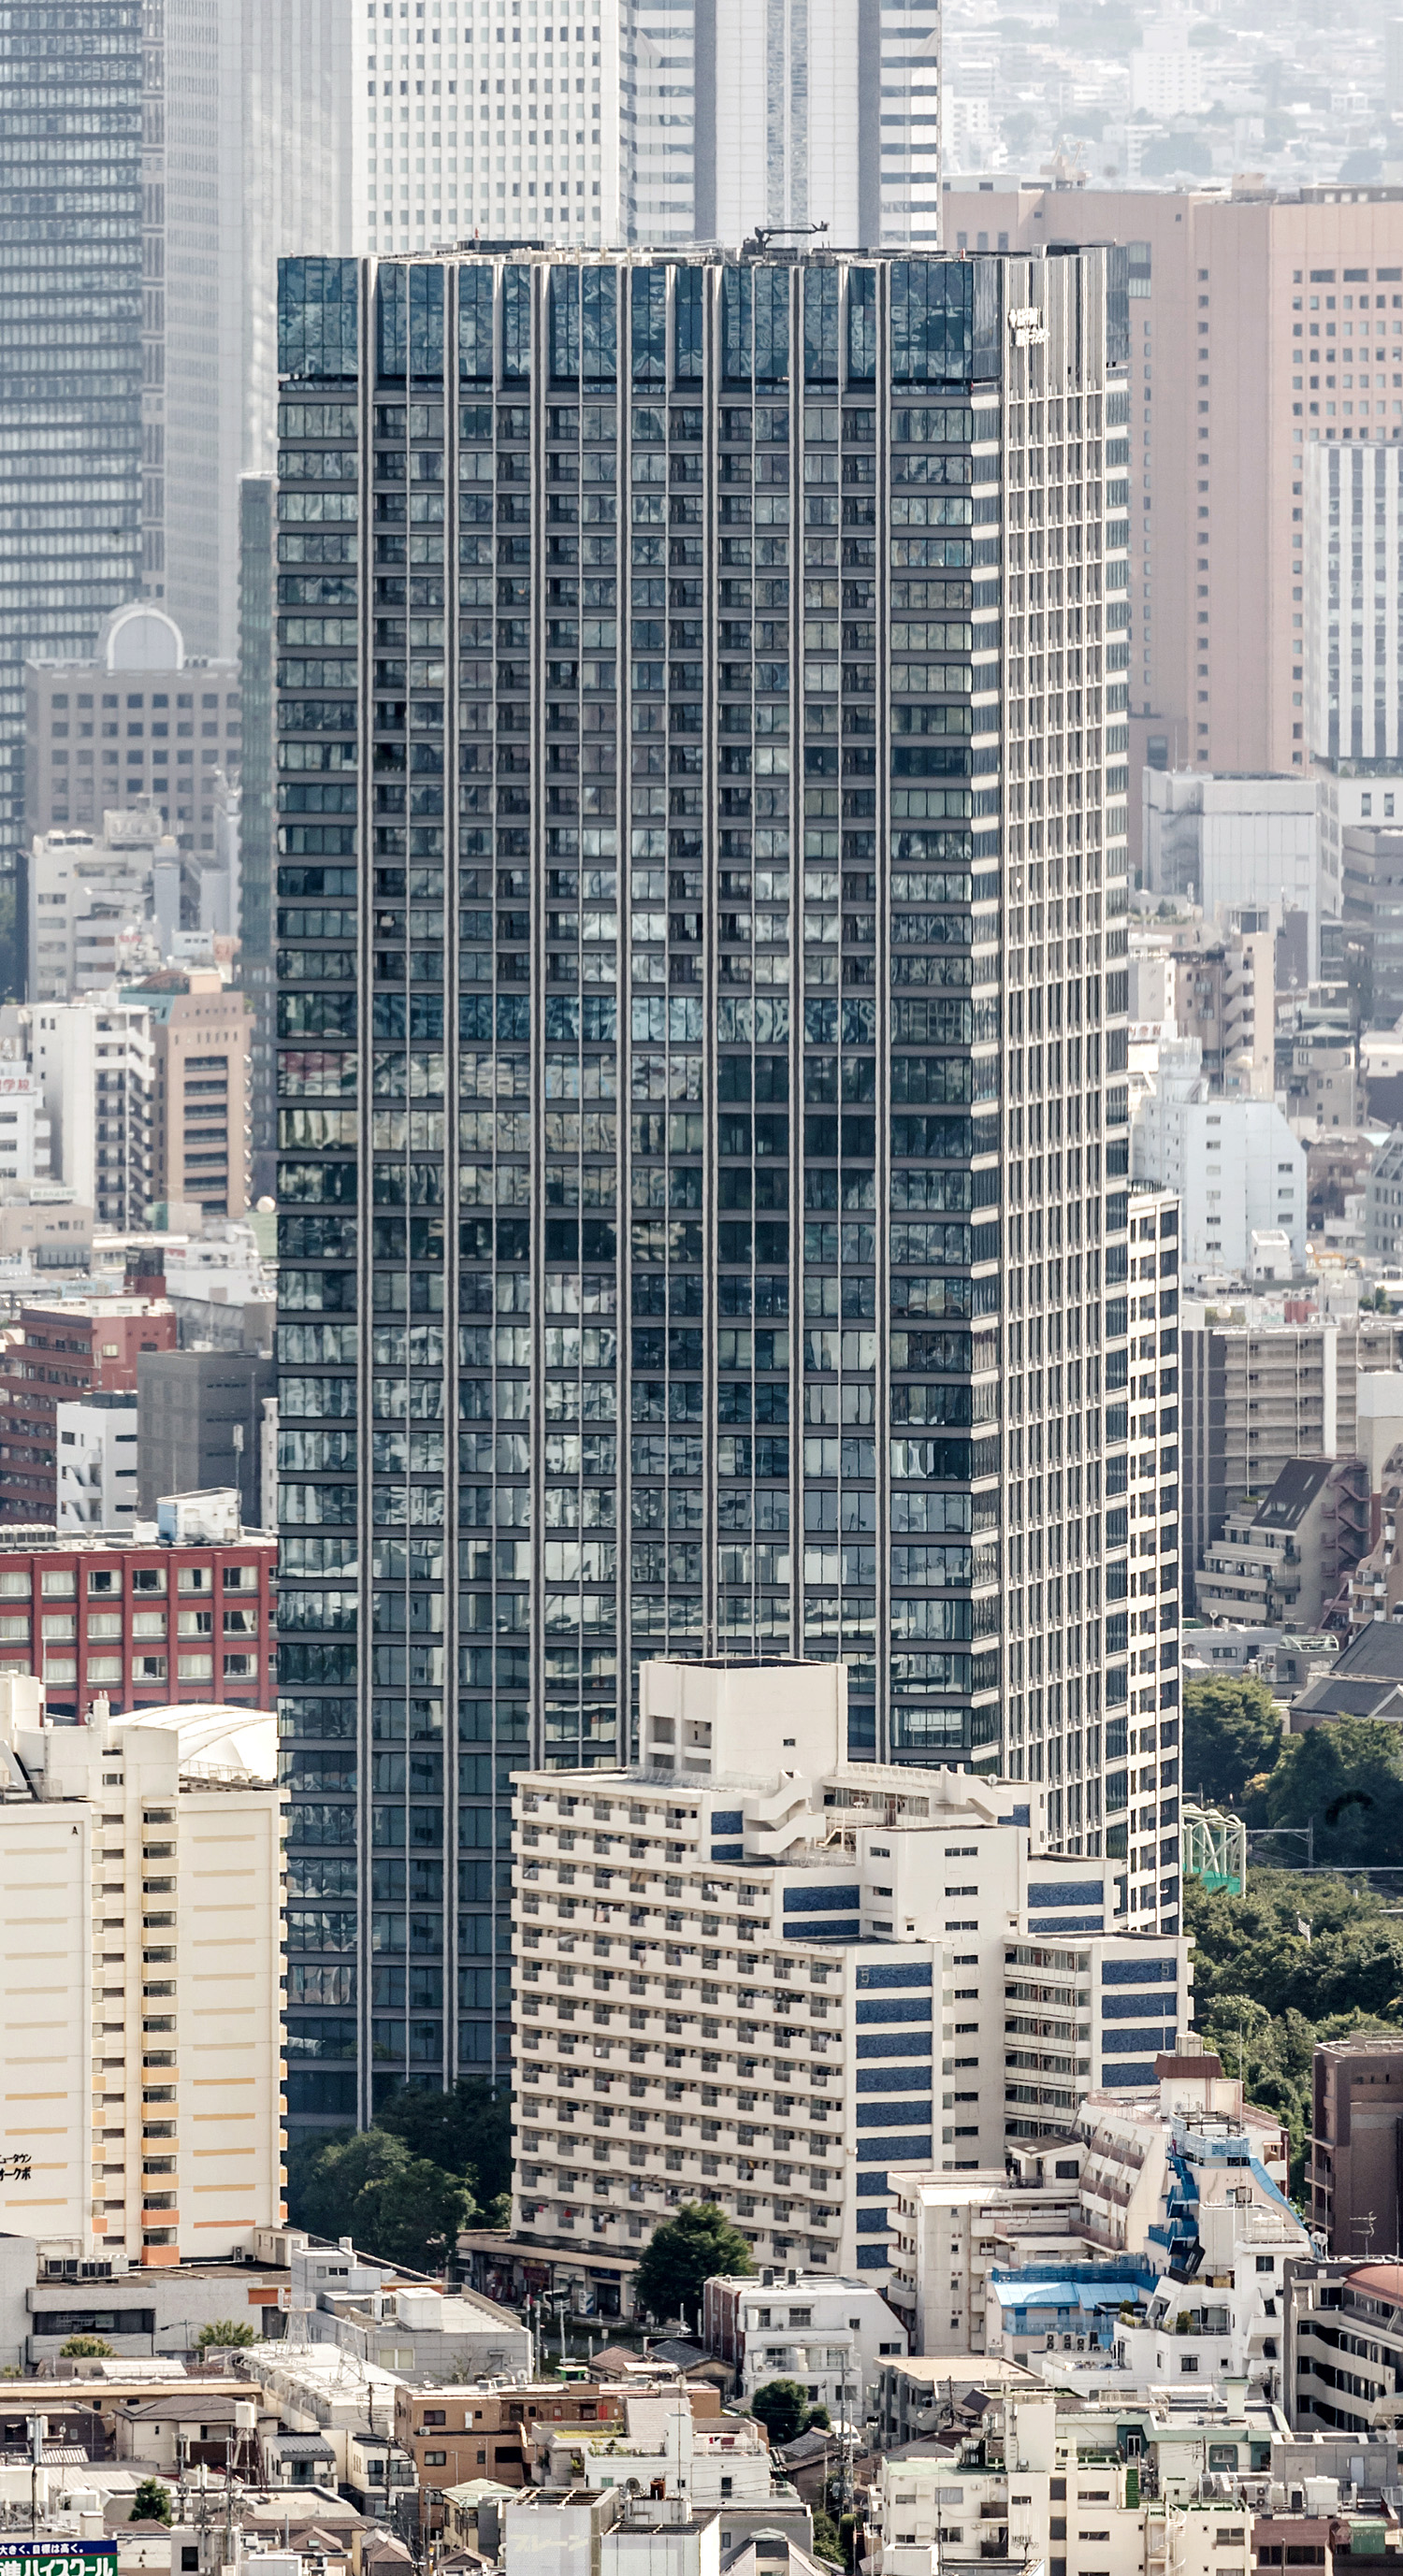 Sumitomo Fudosan Shinjuku Garden Tower, Tokyo - View from Sunshine 60 Tower. © Mathias Beinling